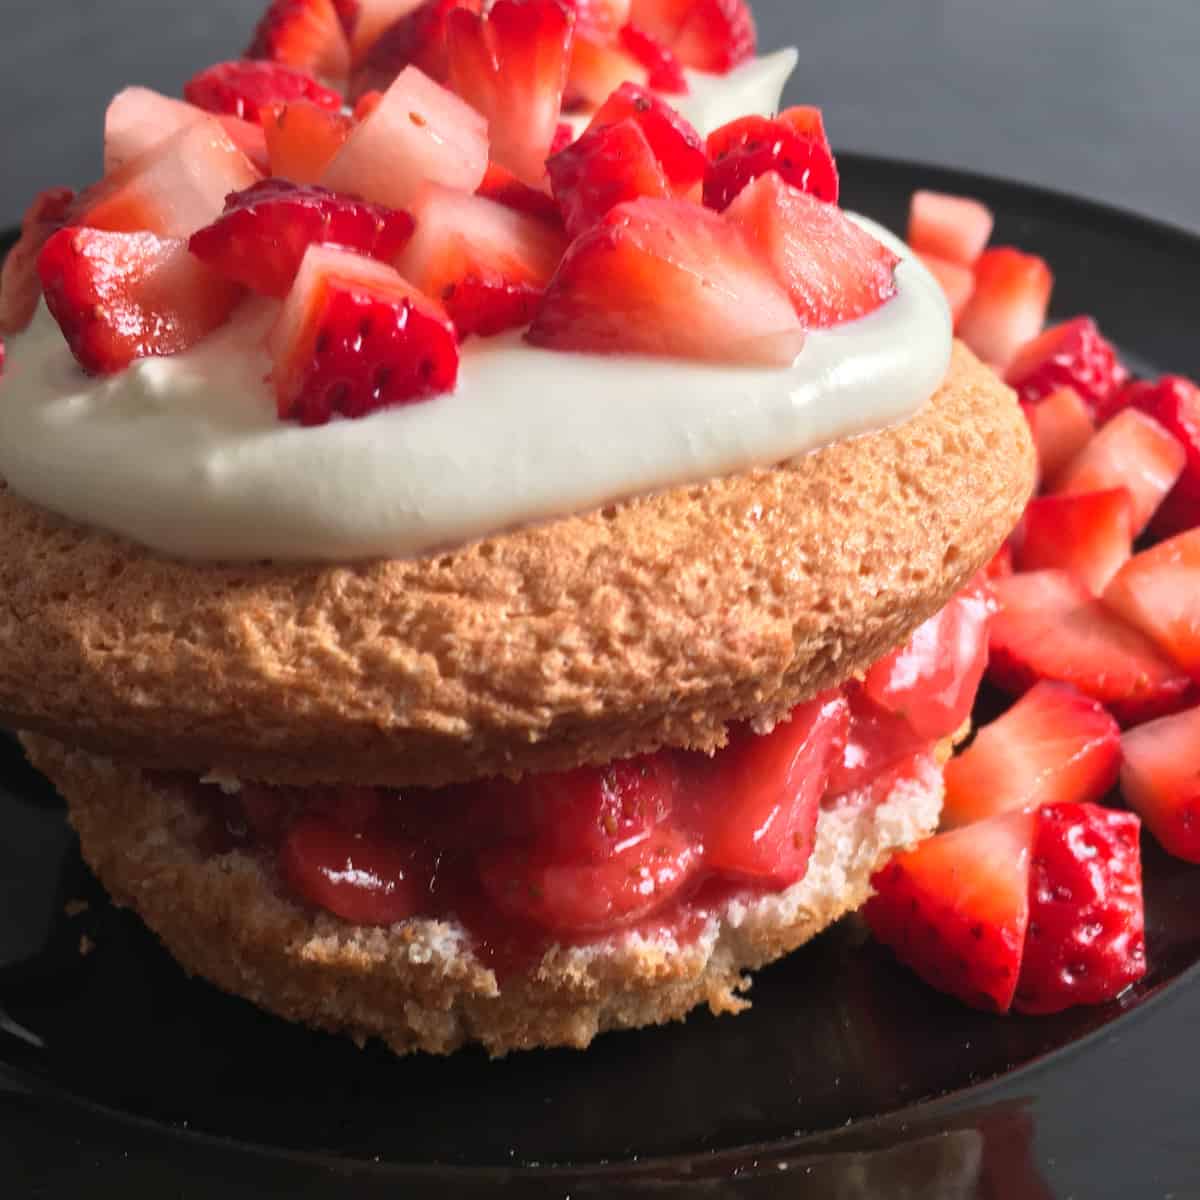 sugar free strawberry shortcake